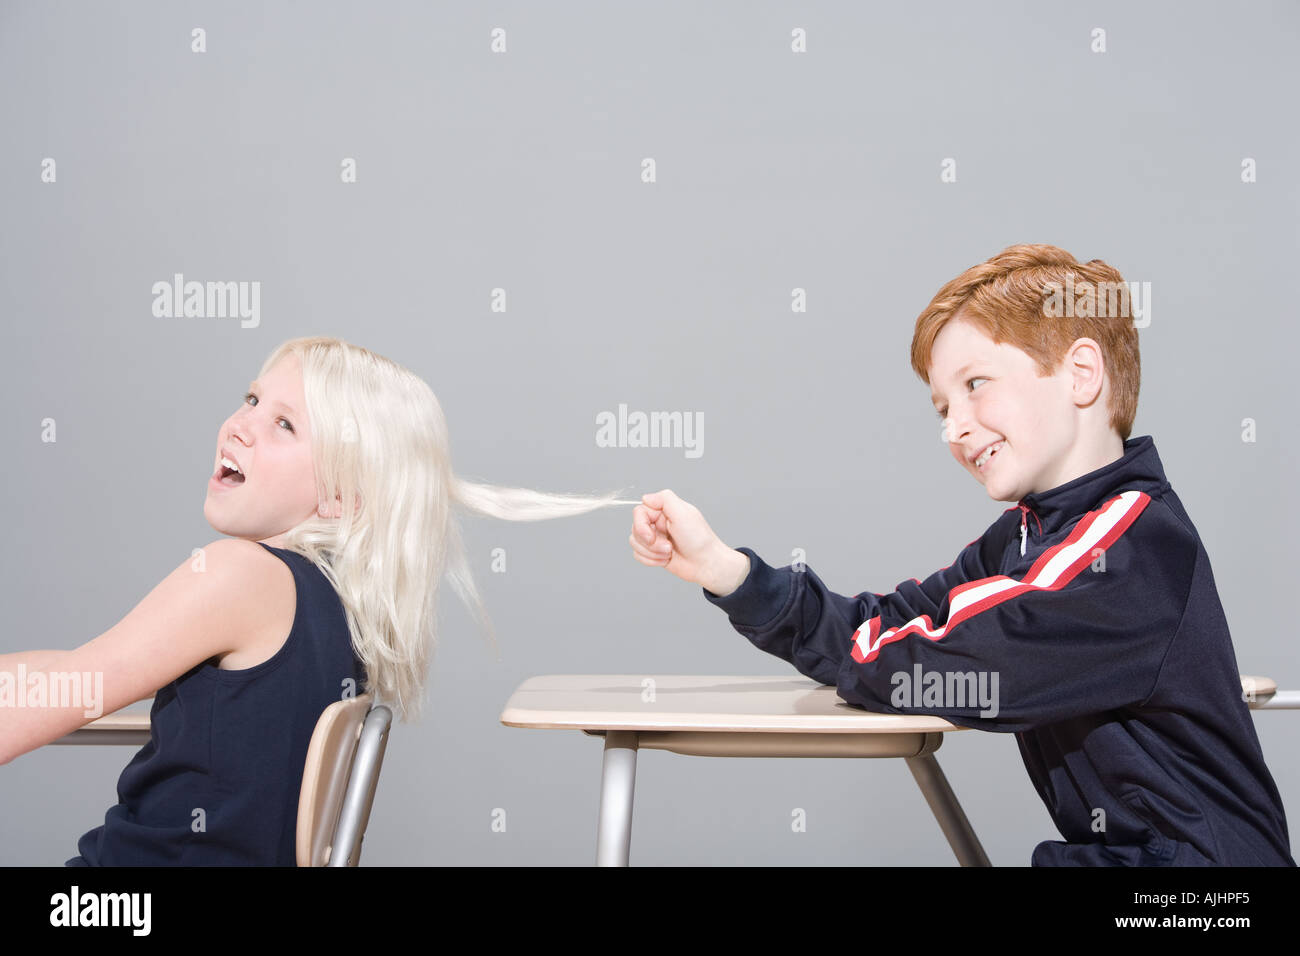 Boy pulling girl's hair Stock Photo - Alamy